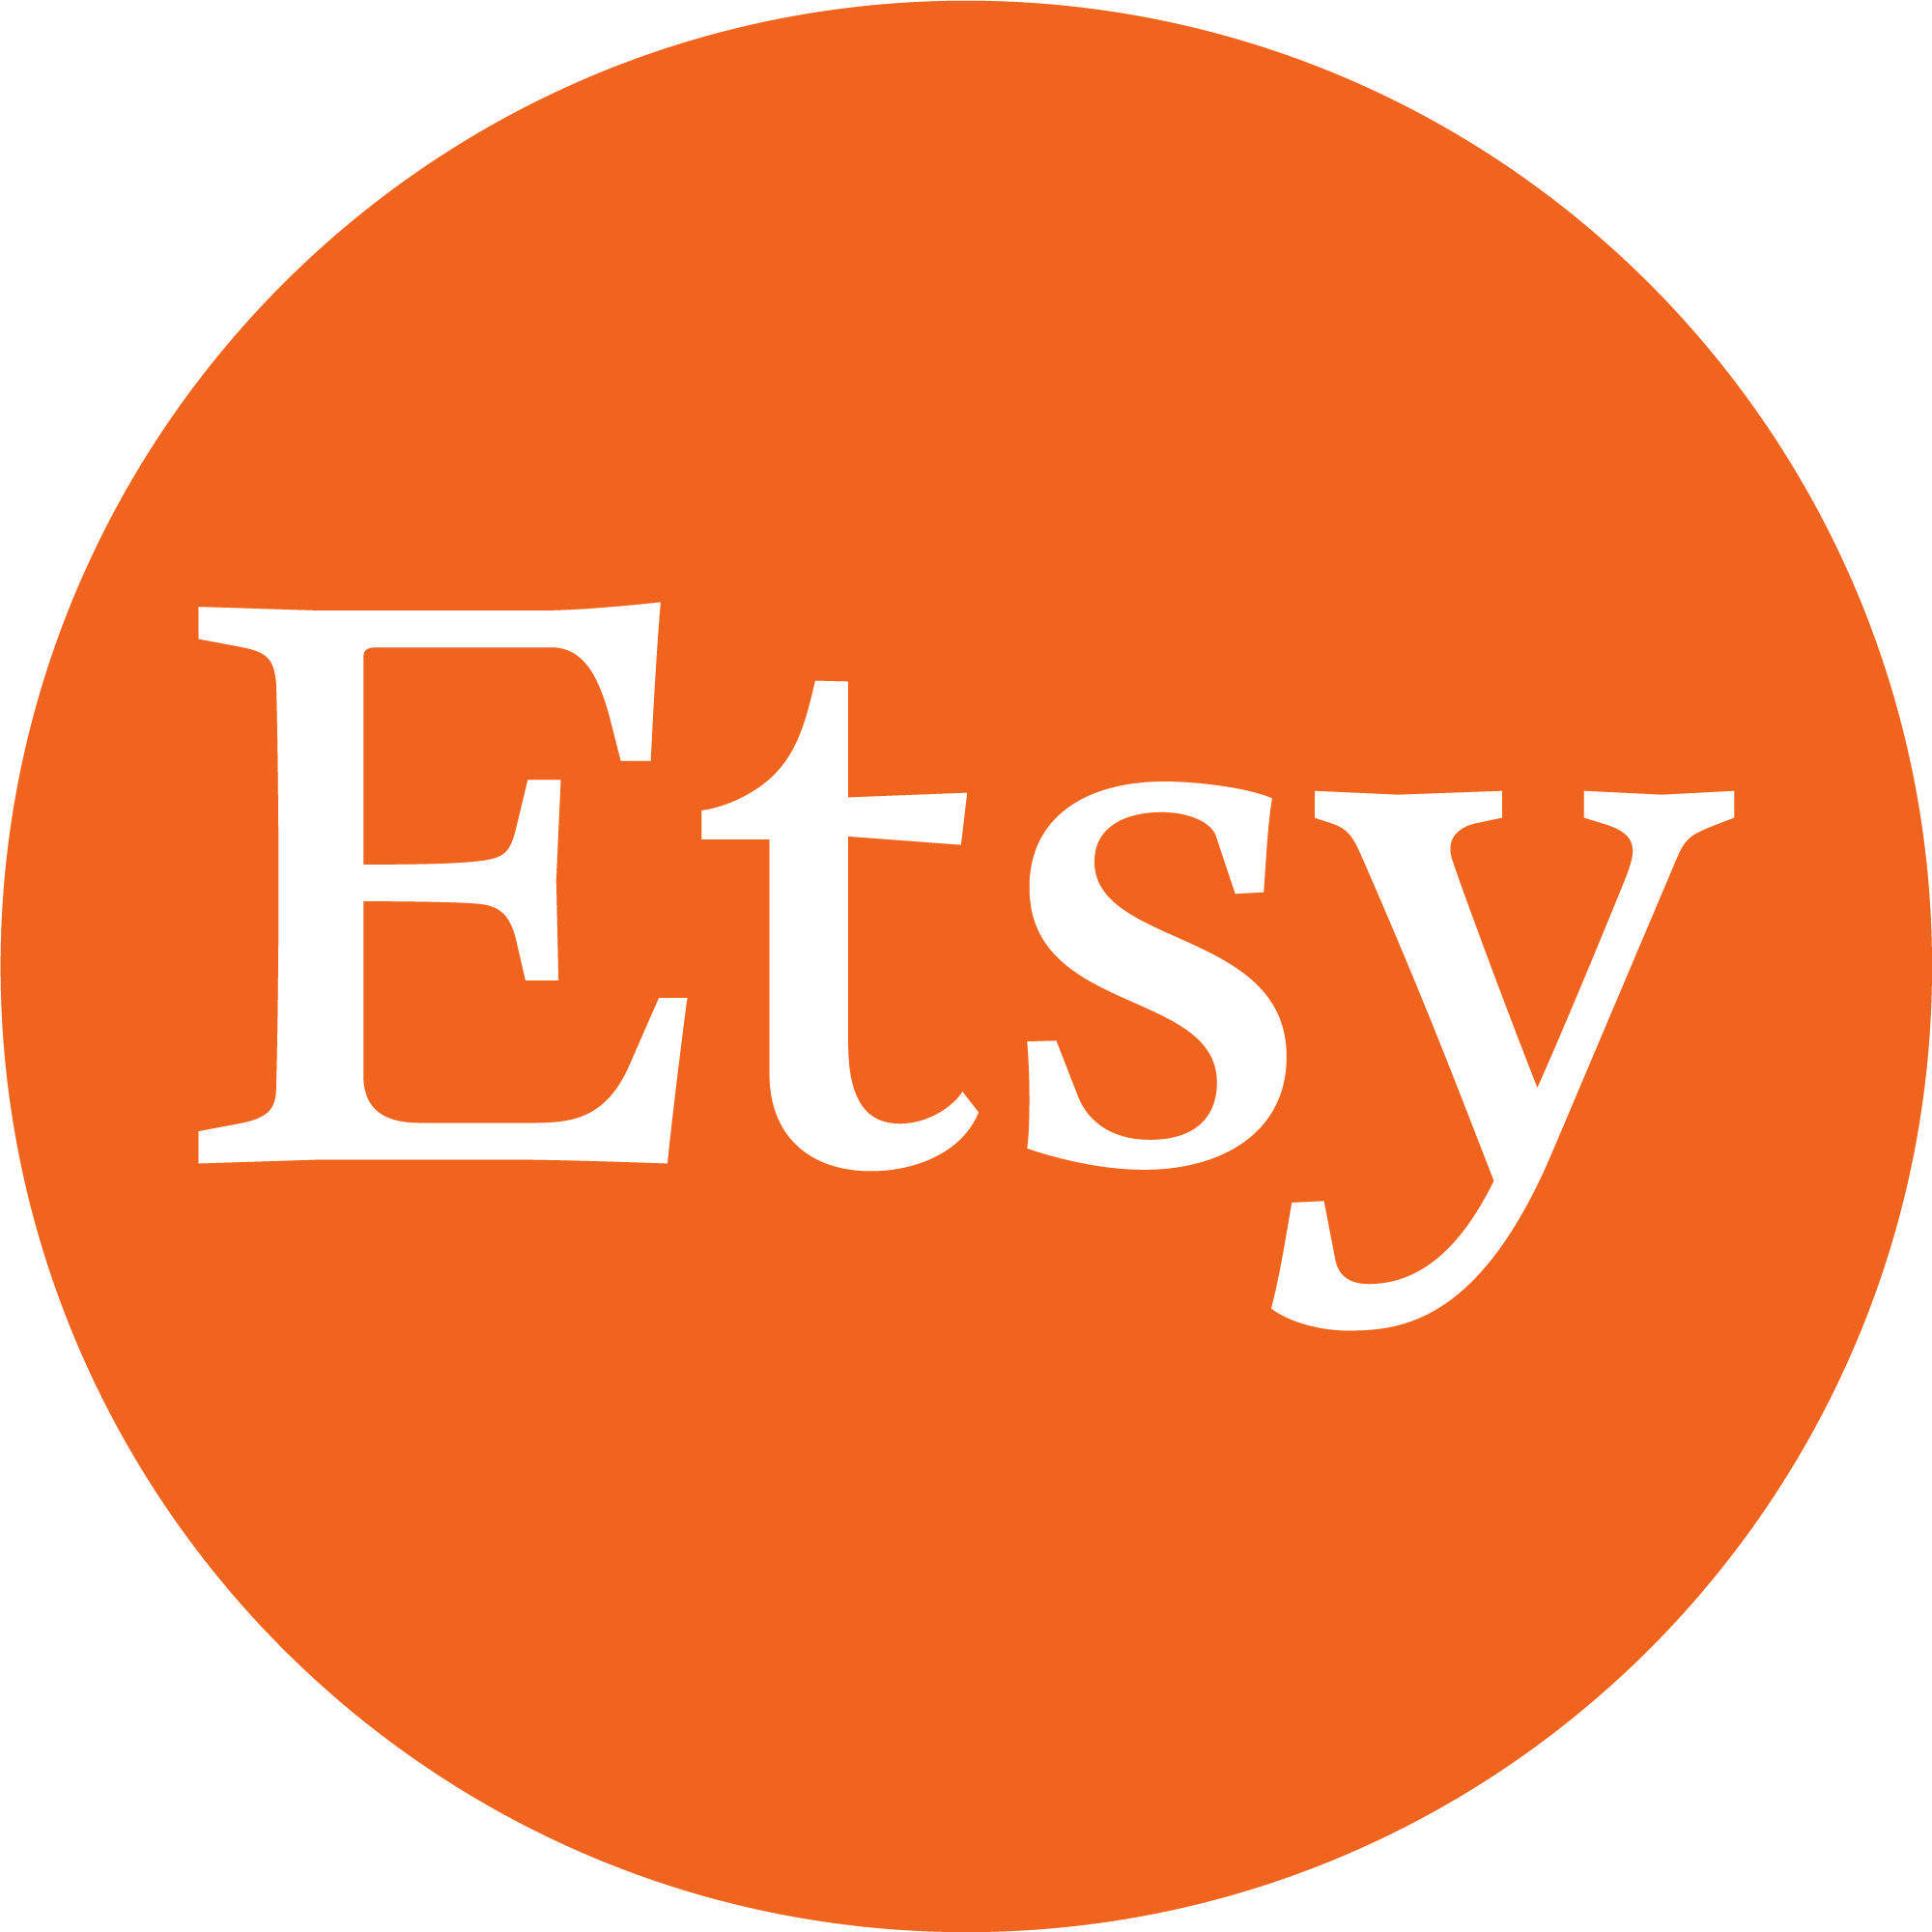 etsy logo transparent